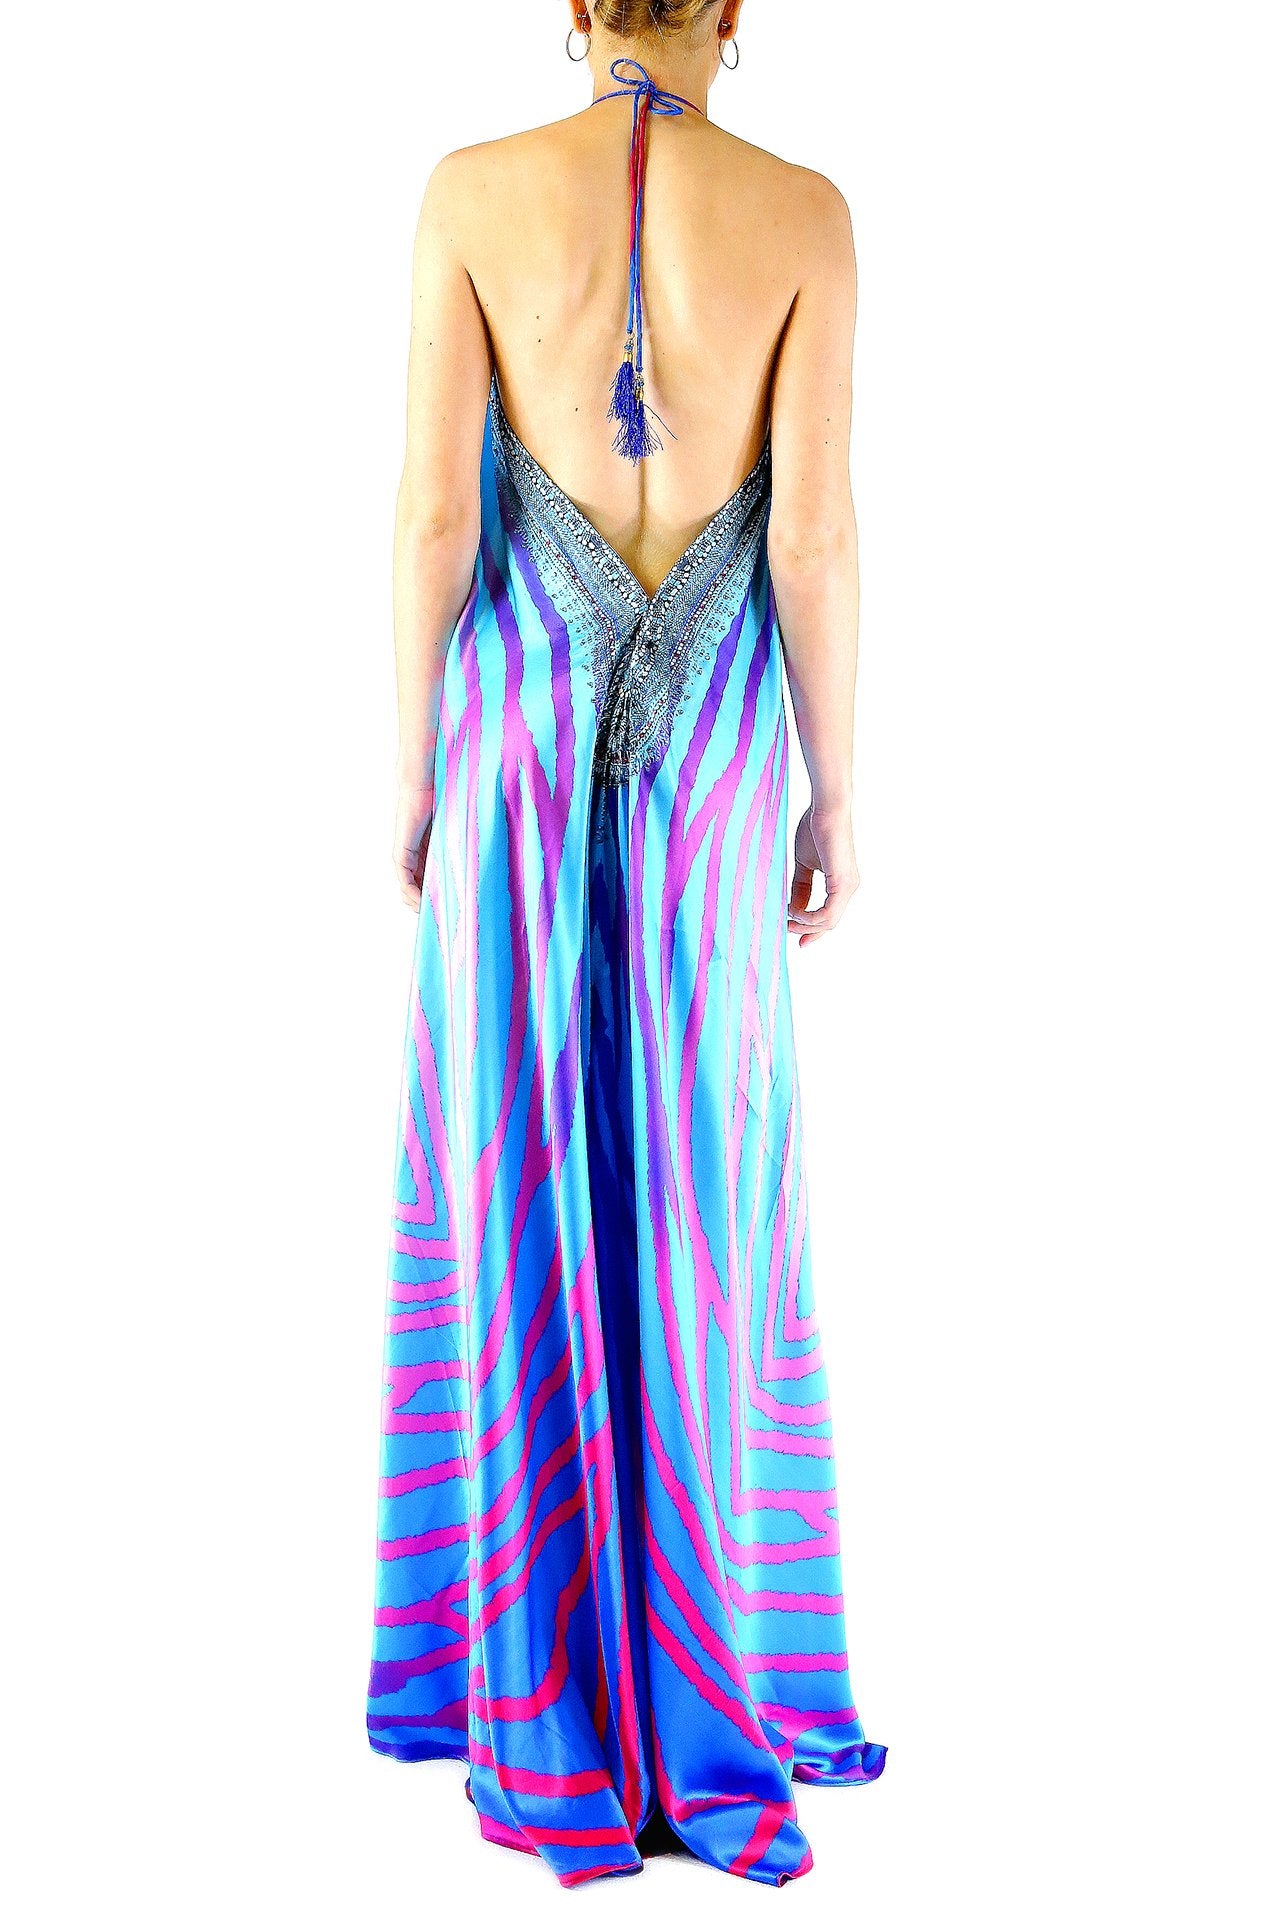 Blue Infinity Dress - S'roushaa